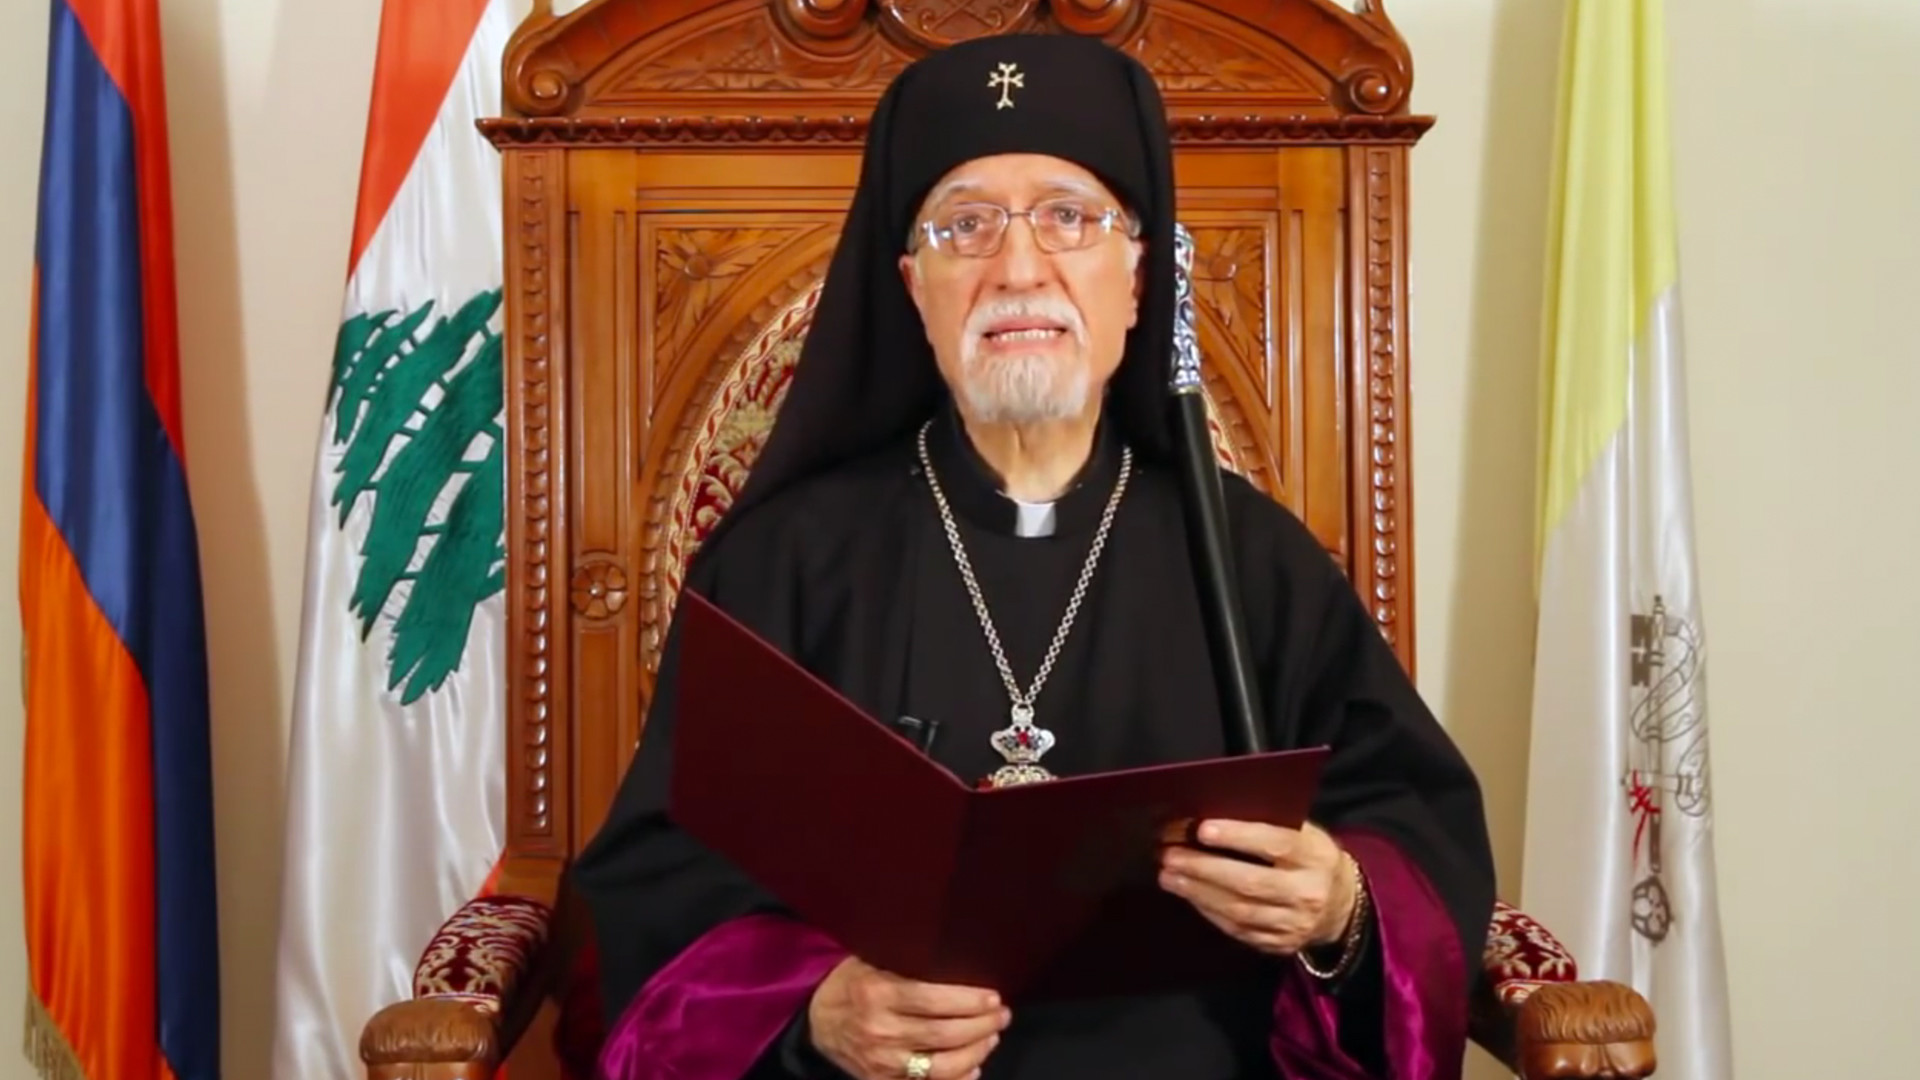 Le patriarche arménien Nerses Bedros XIX (Photo: Youtube)